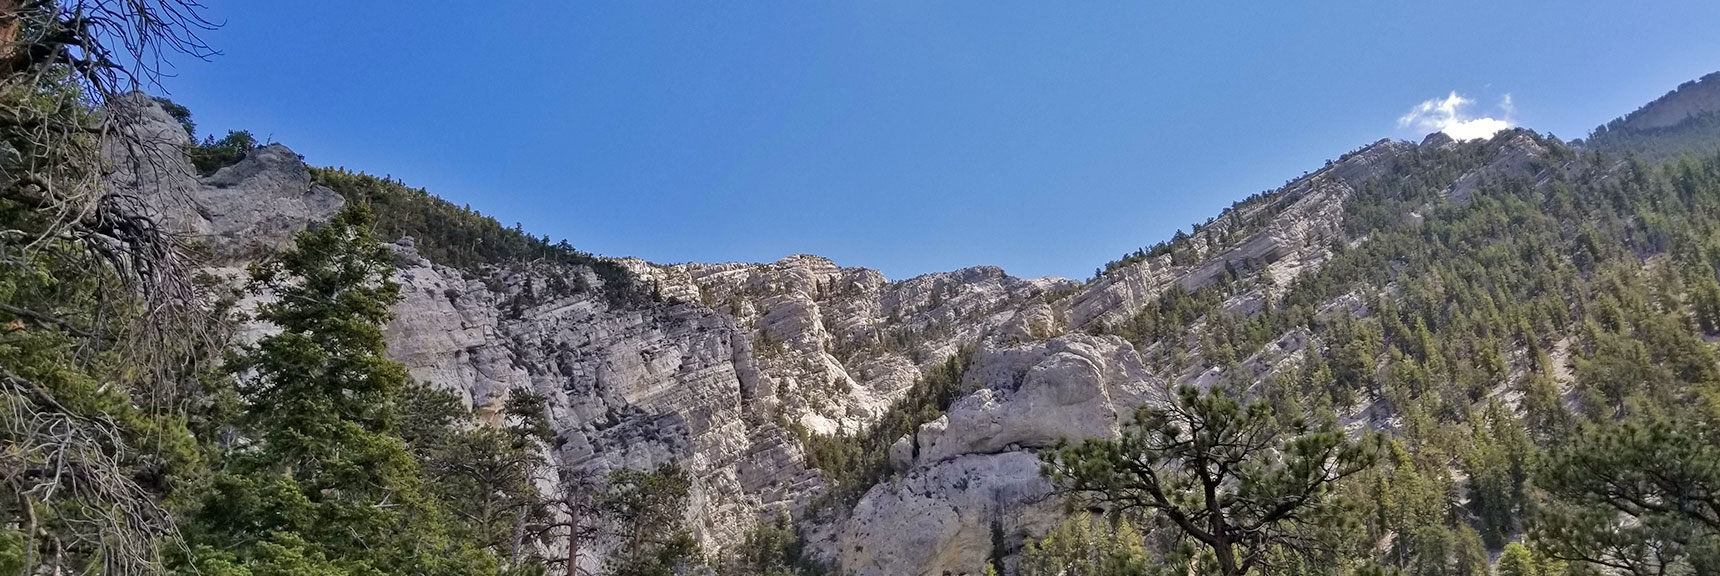 View of Ridgeline Between Bonanza and McFarland Peak from Below on Bonanza Trail | Bonanza Peak from Lee Canyon via the Lower Bristlecone Pine Trail and Bonanza Trail | Spring Mountains, Nevada